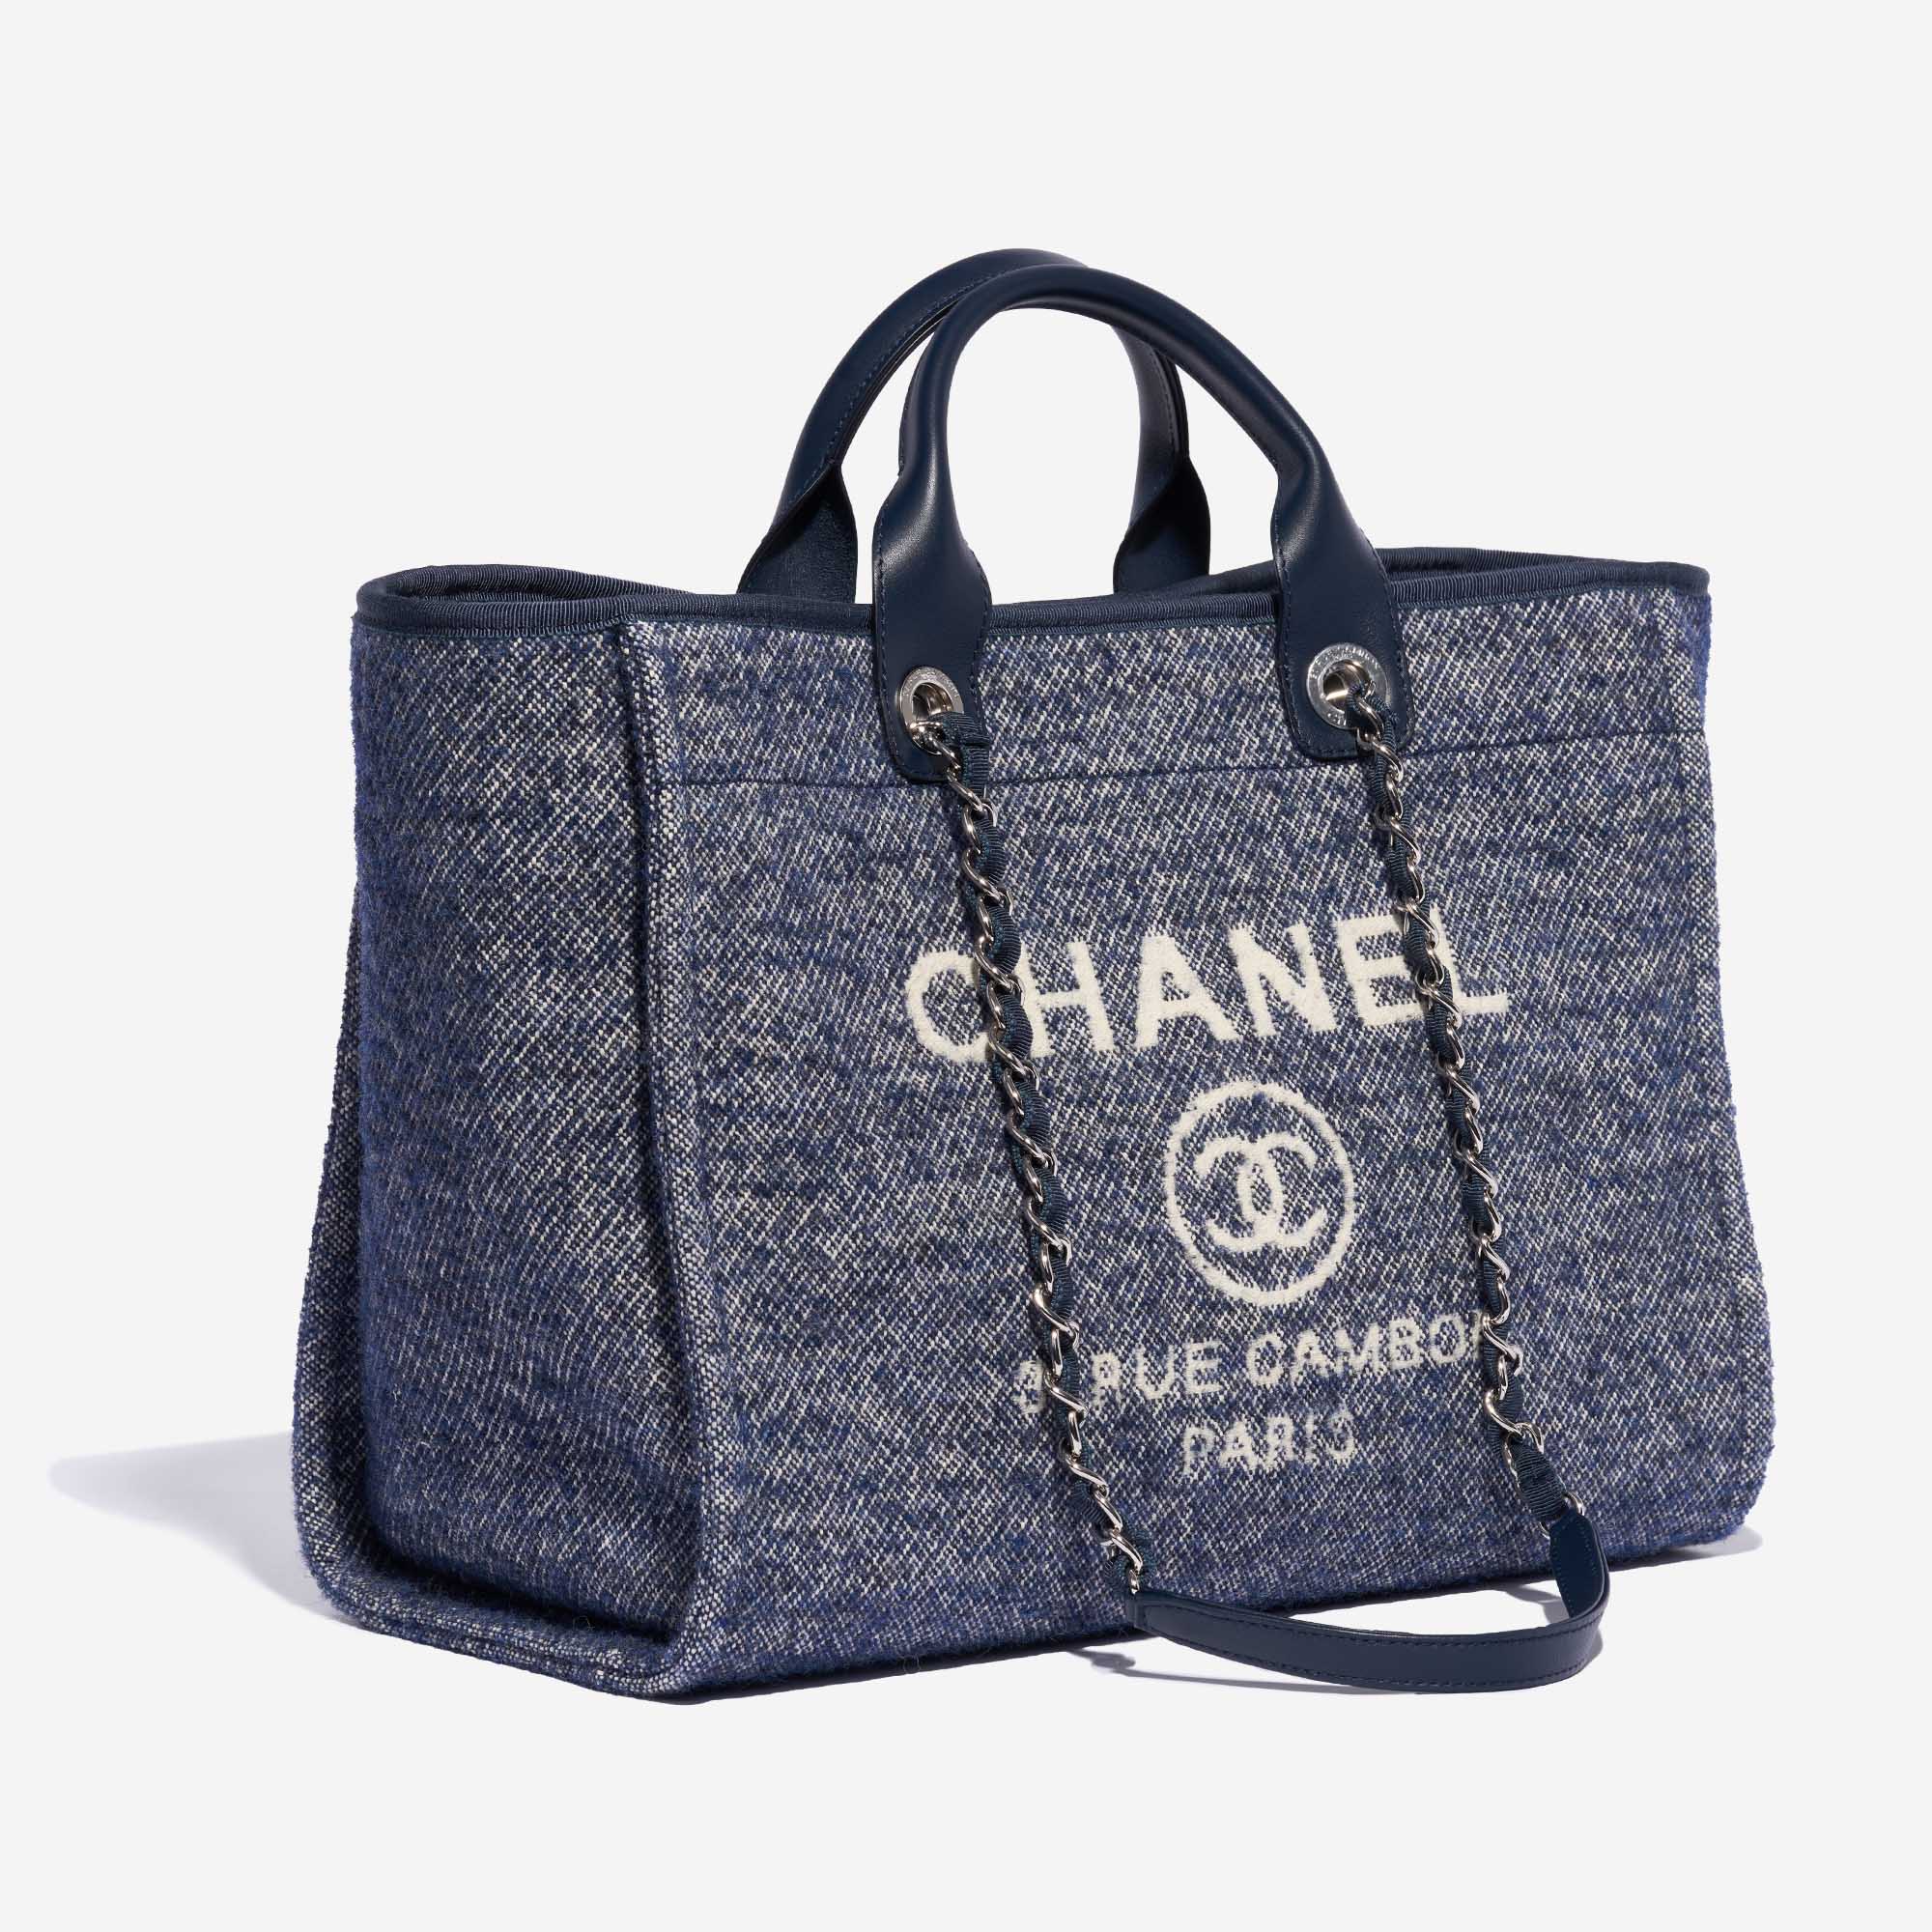 Deauville tweed tote Chanel Beige in Tweed - 33833828